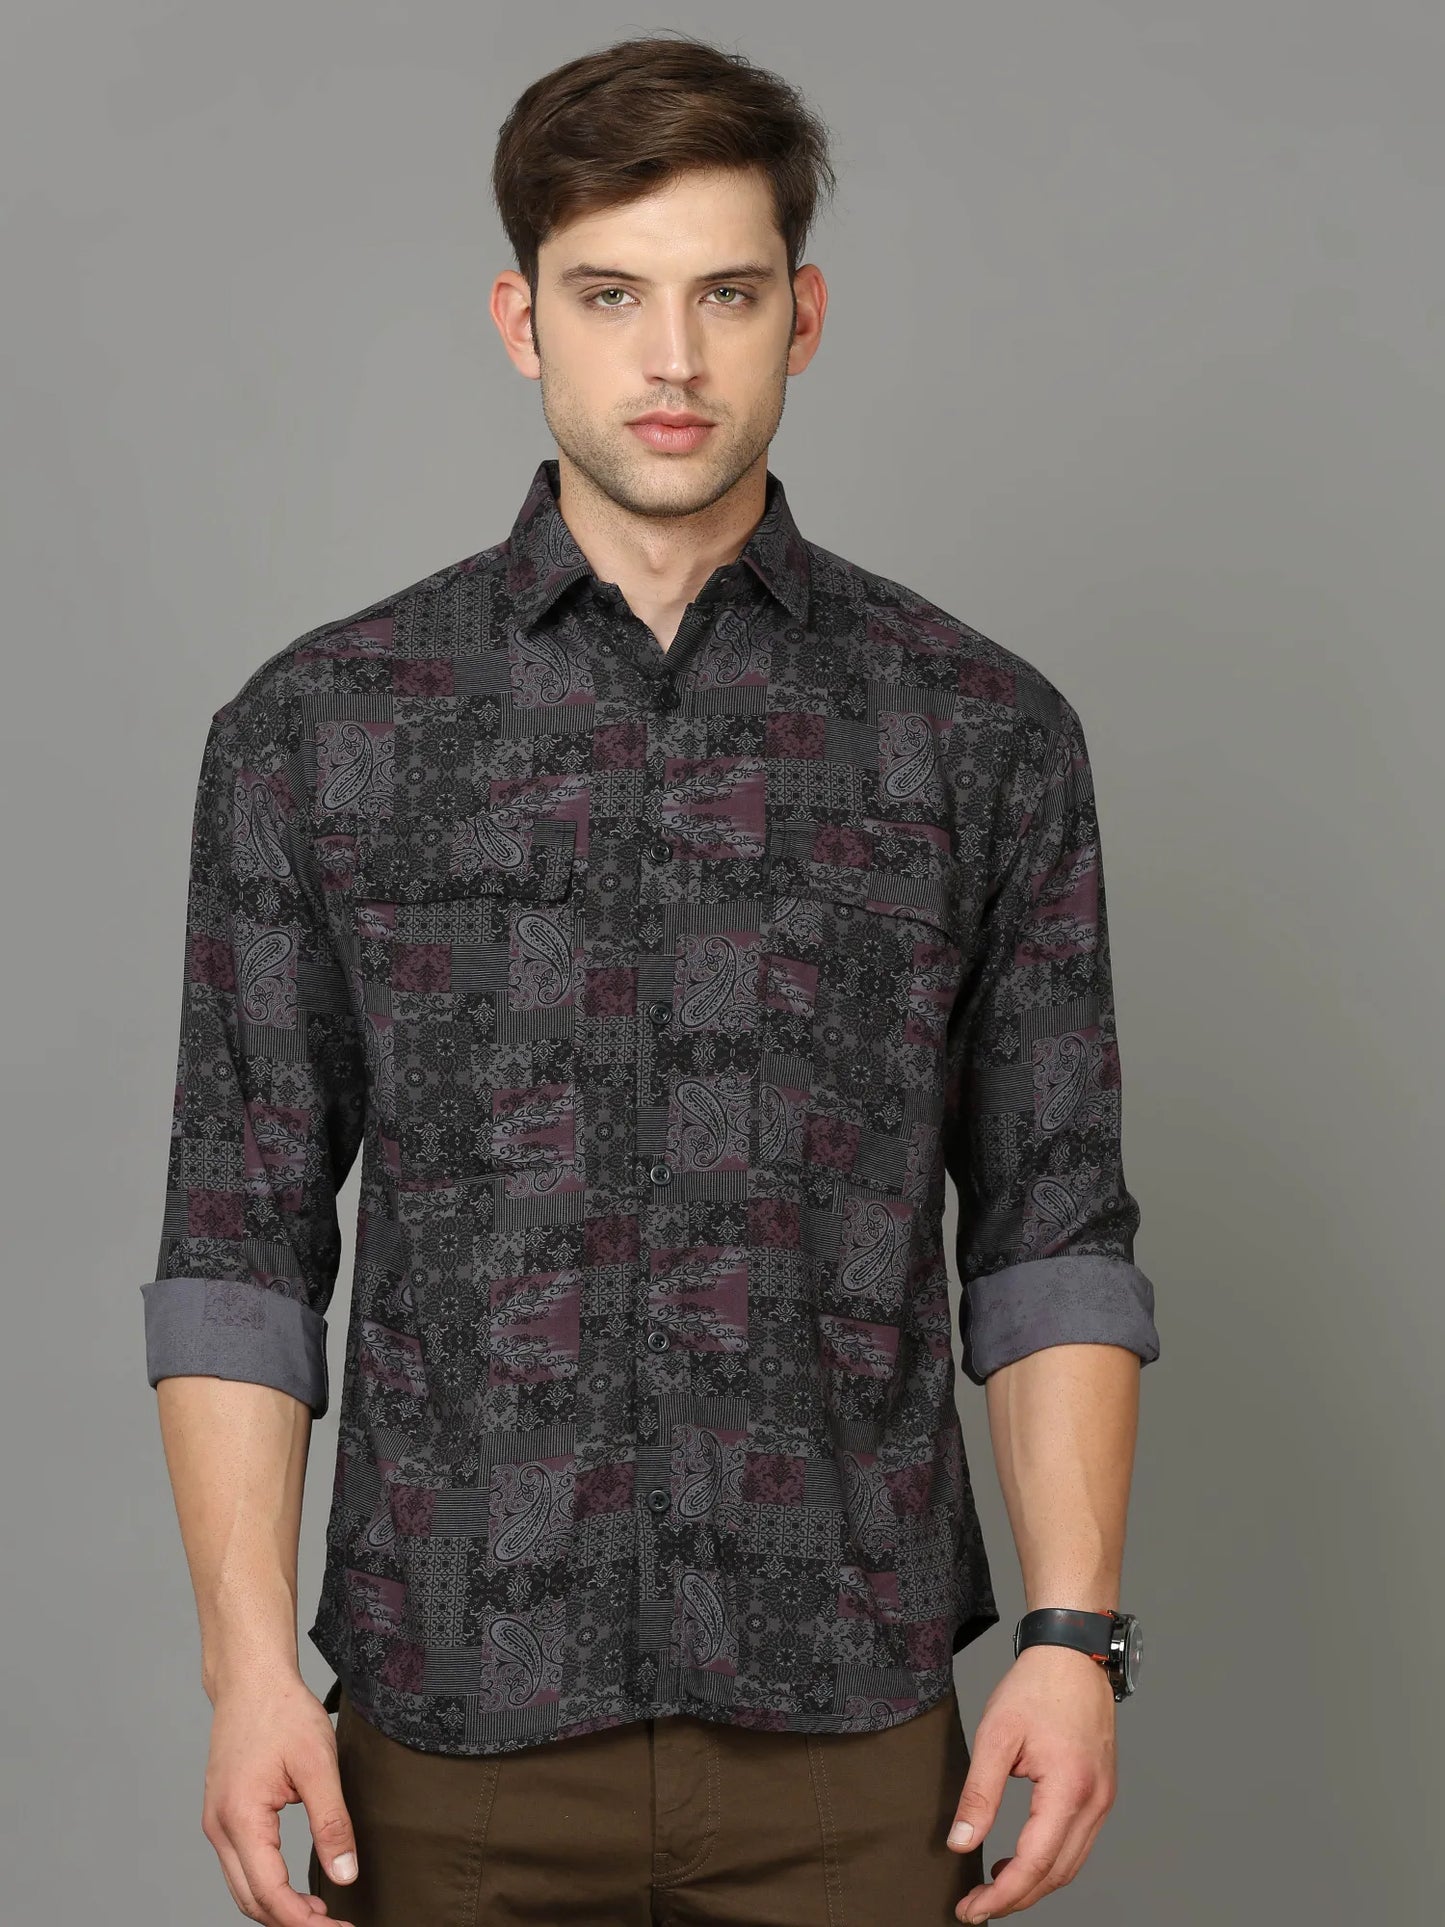 Oversized Dark Grey Rayon Shirt for Men